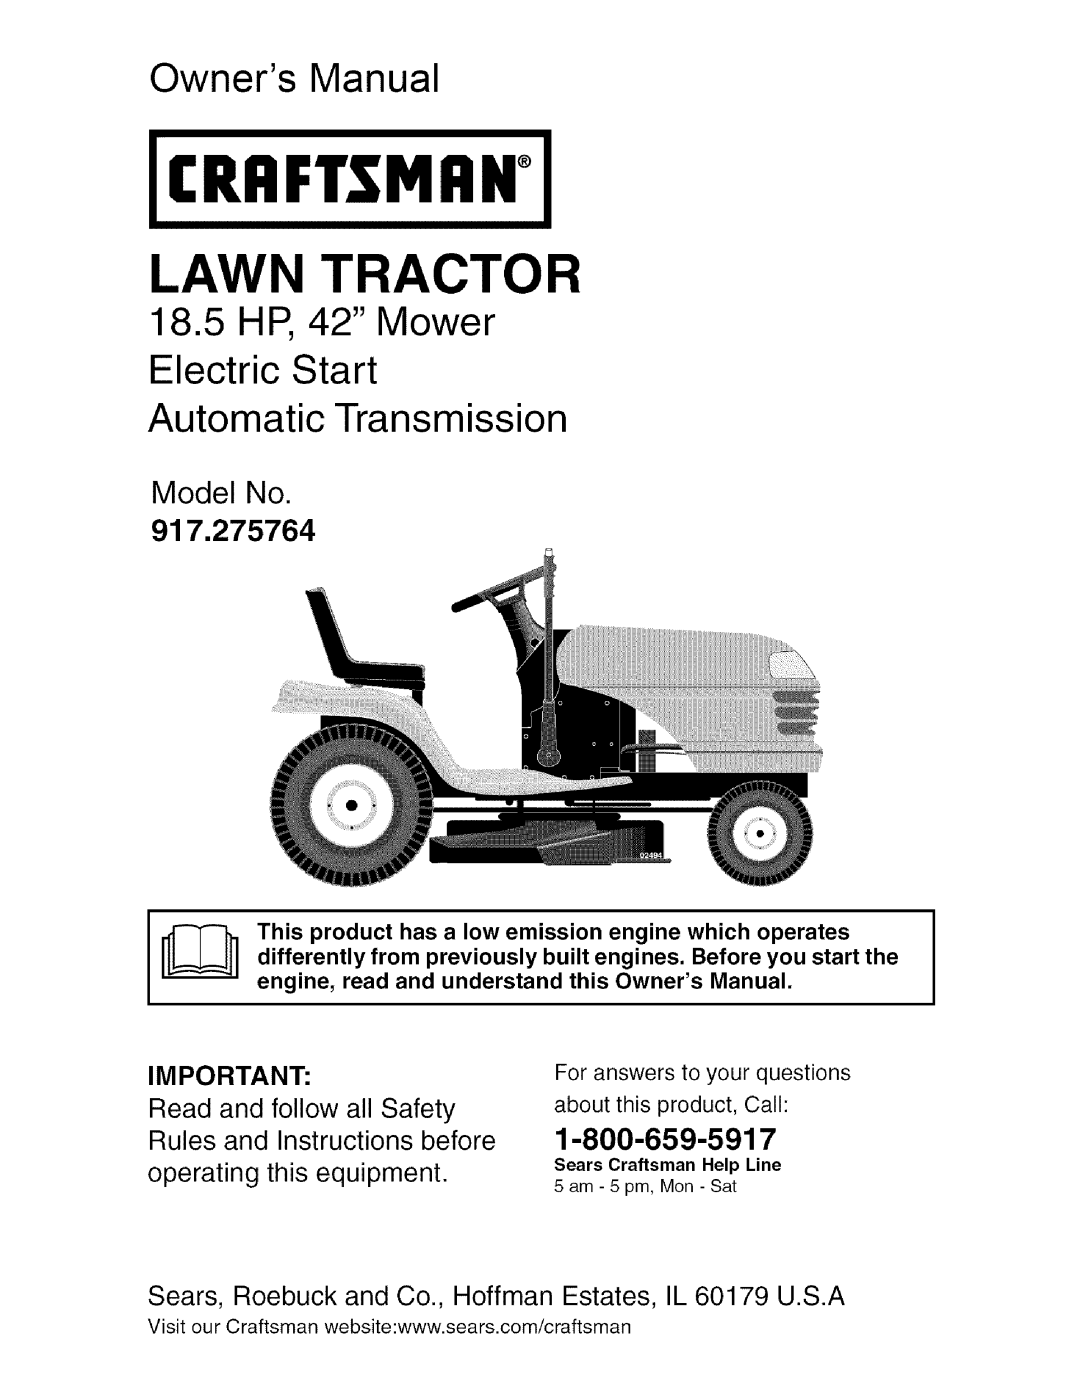 Craftsman 917.275764 owner manual 18.5HP, 42 Mower, Model No, operating this equipment, Jcrrftsmrnj, Lawn Tractor 